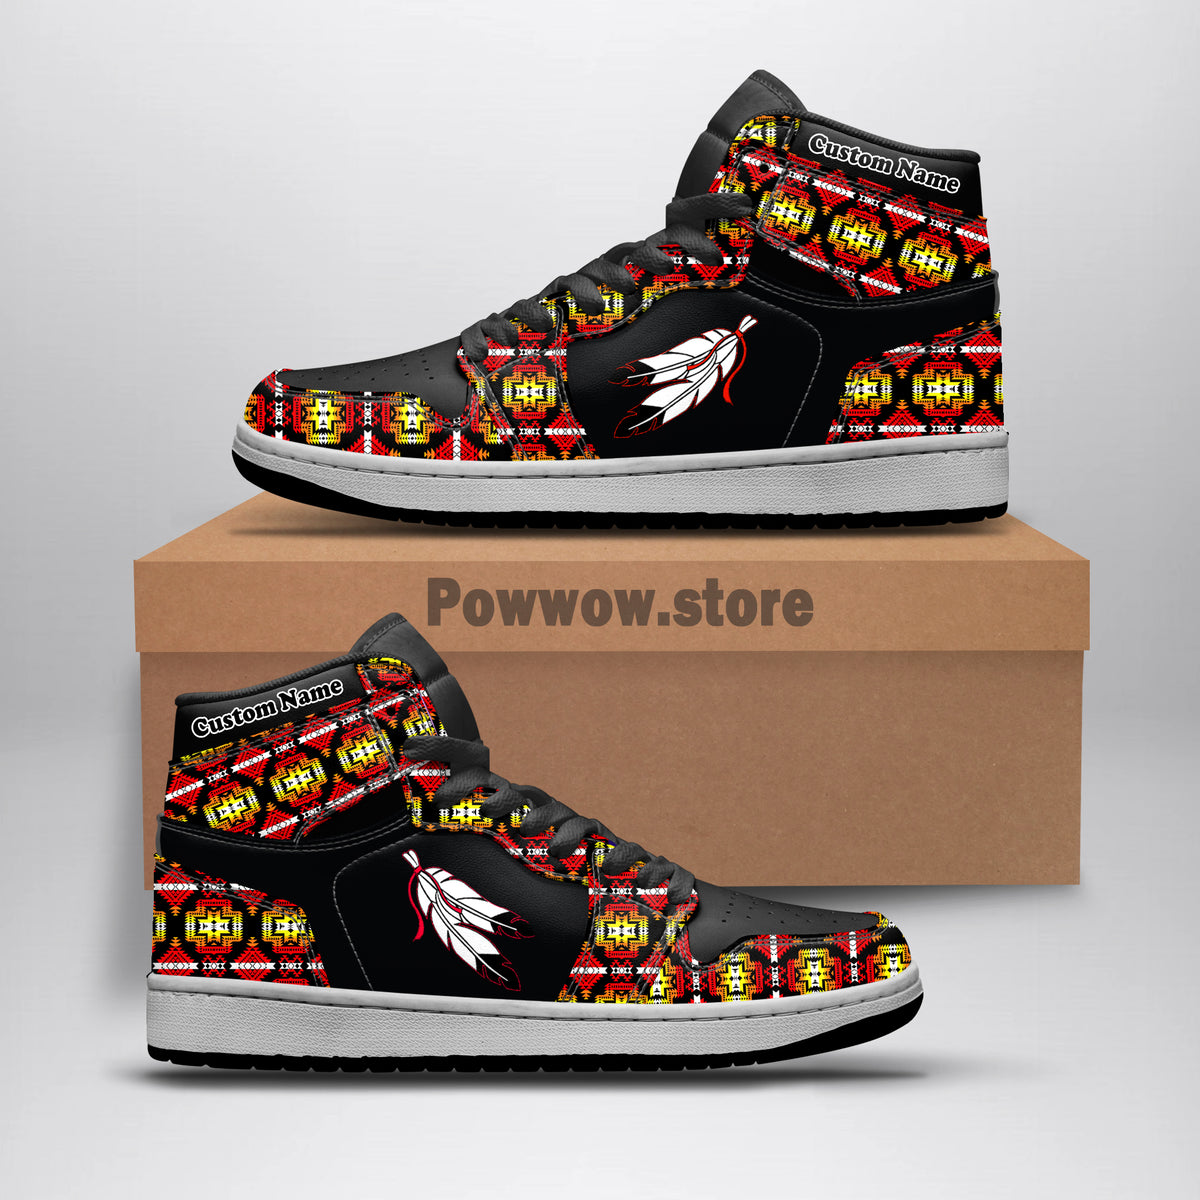 Powwow StoreJDS0108 Pattern Native Shoes